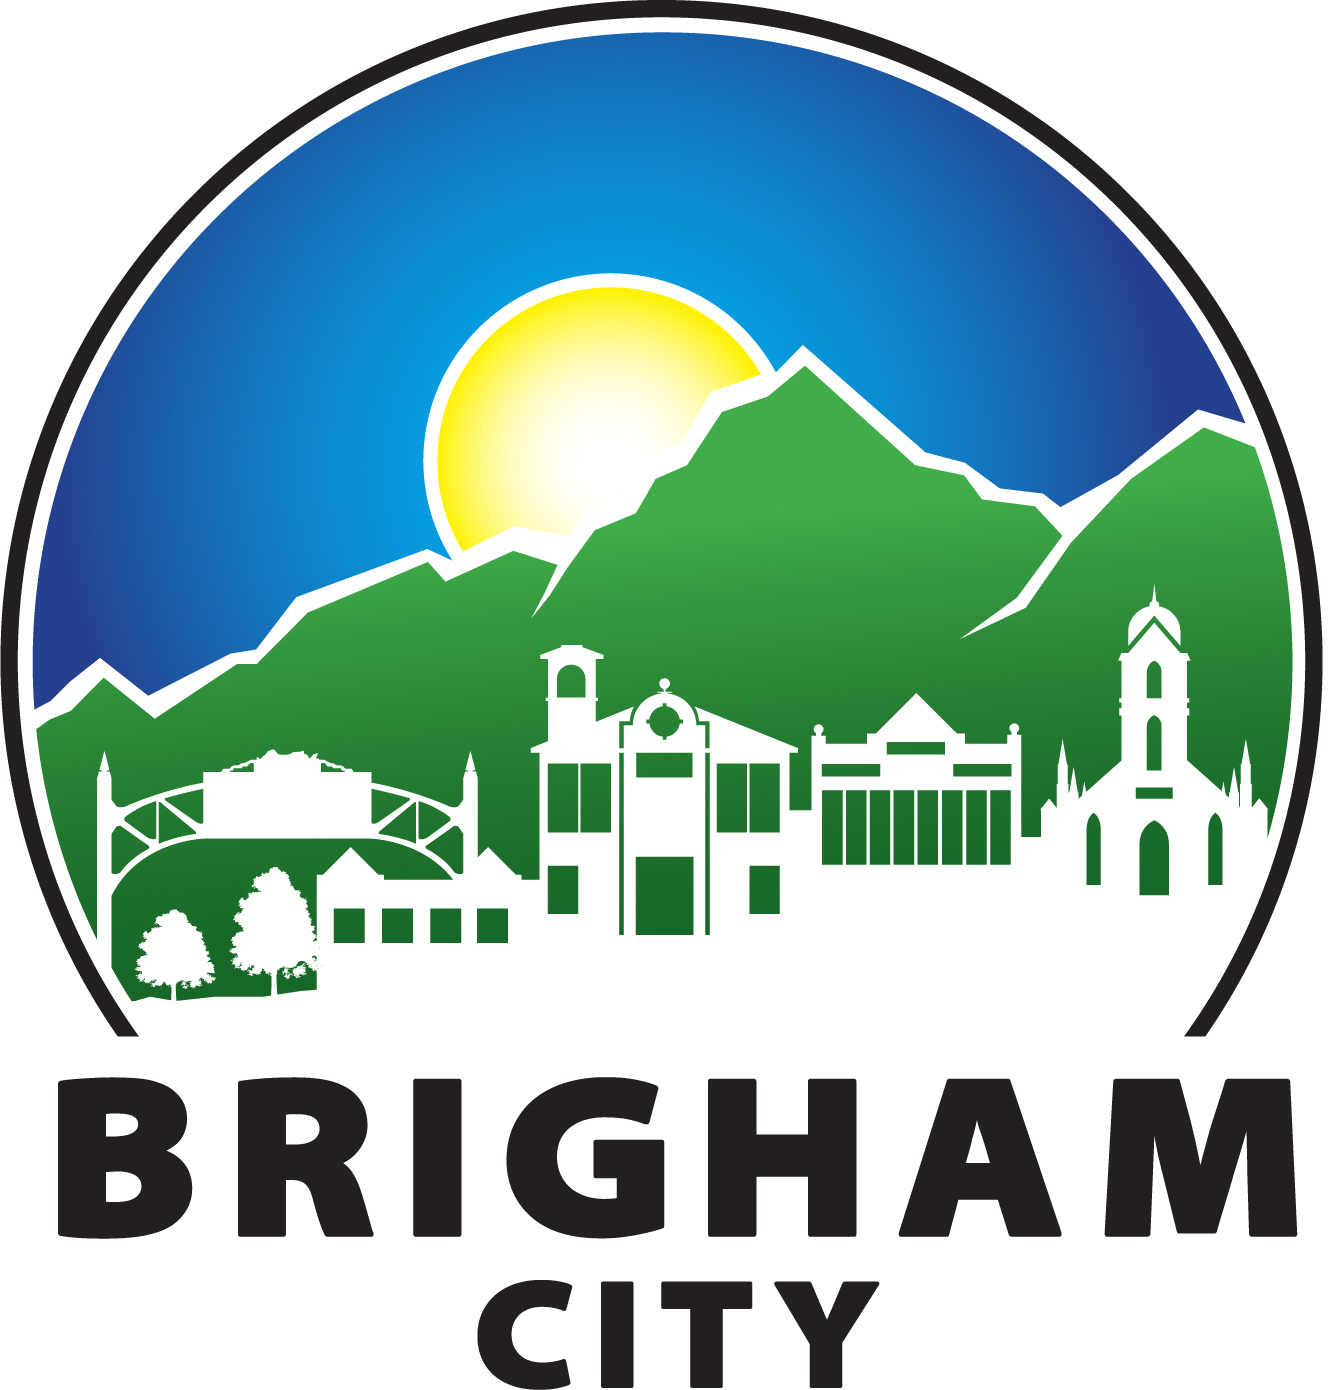 Brigham City Corporation